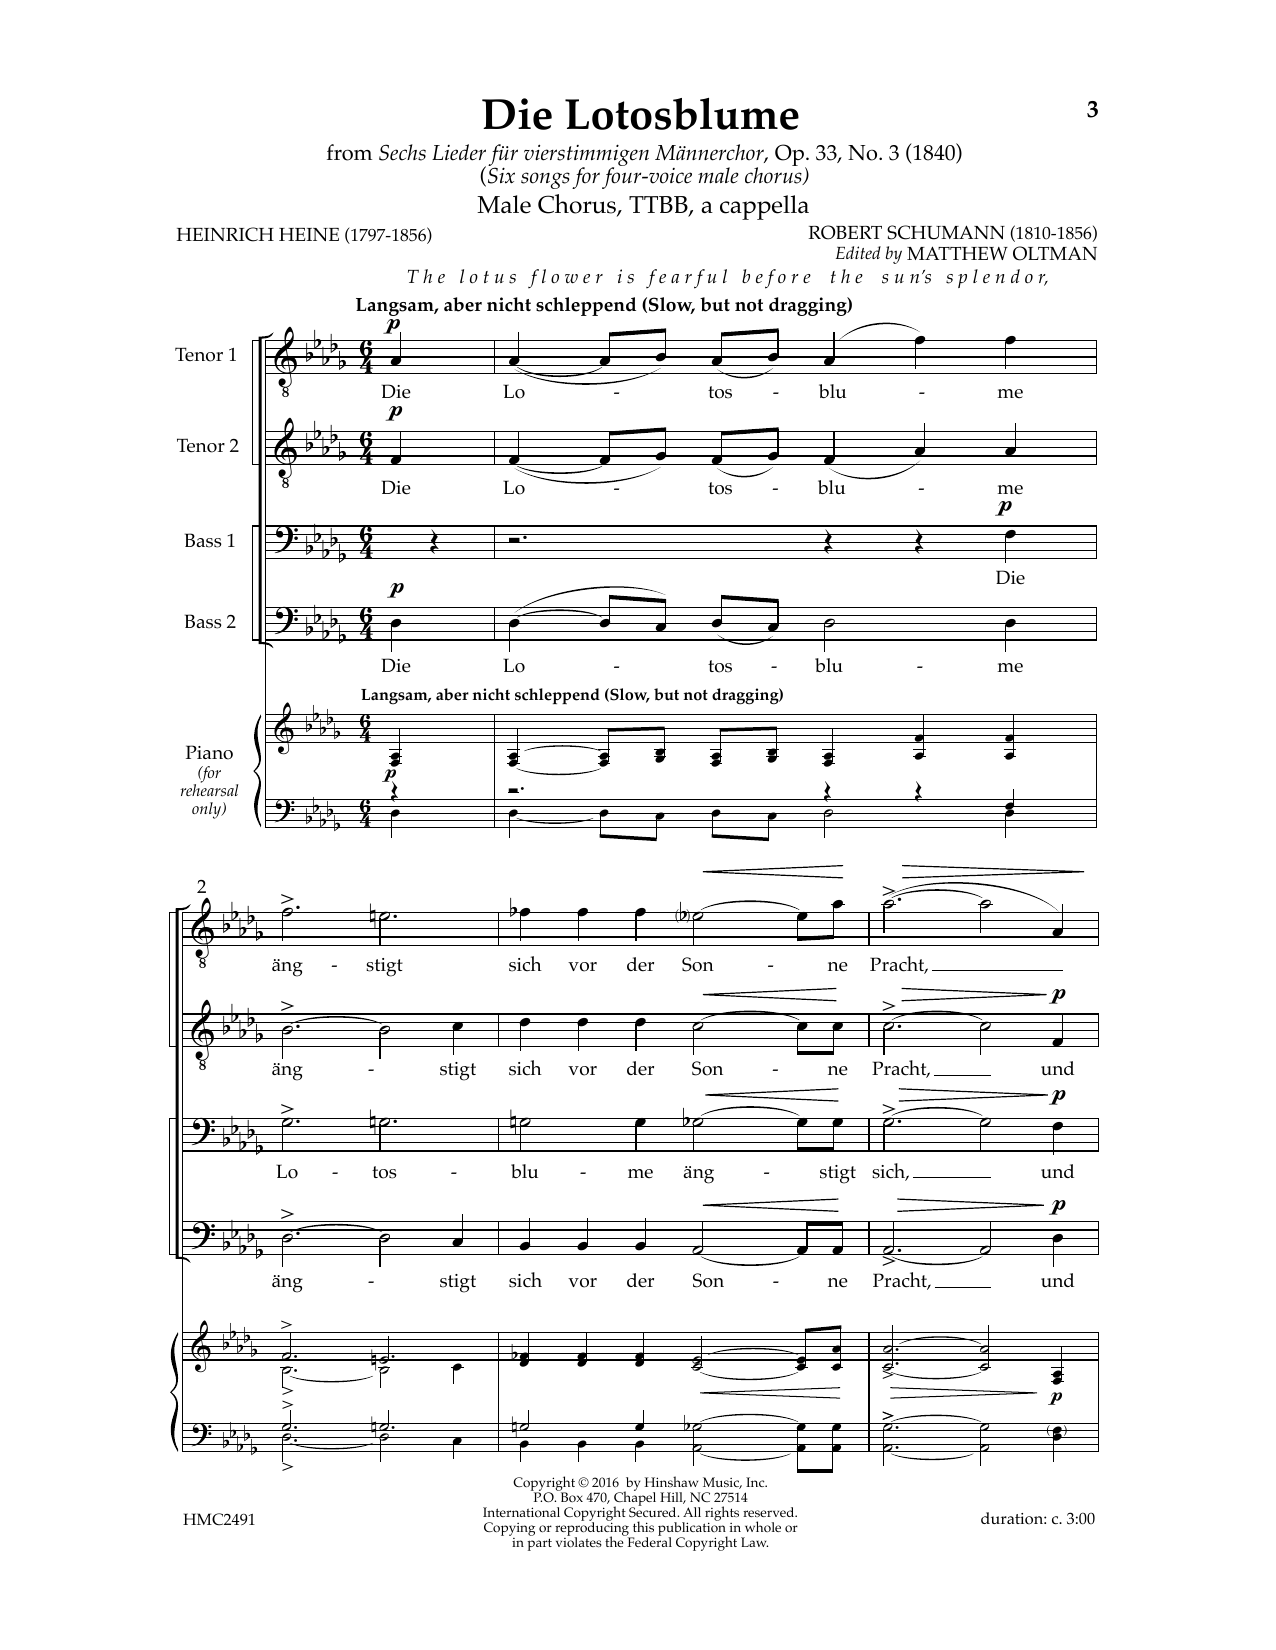 Download Robert Schumann Die Lotosblume (Ed. Matthew D. Oltman) Sheet Music and learn how to play TTBB Choir PDF digital score in minutes